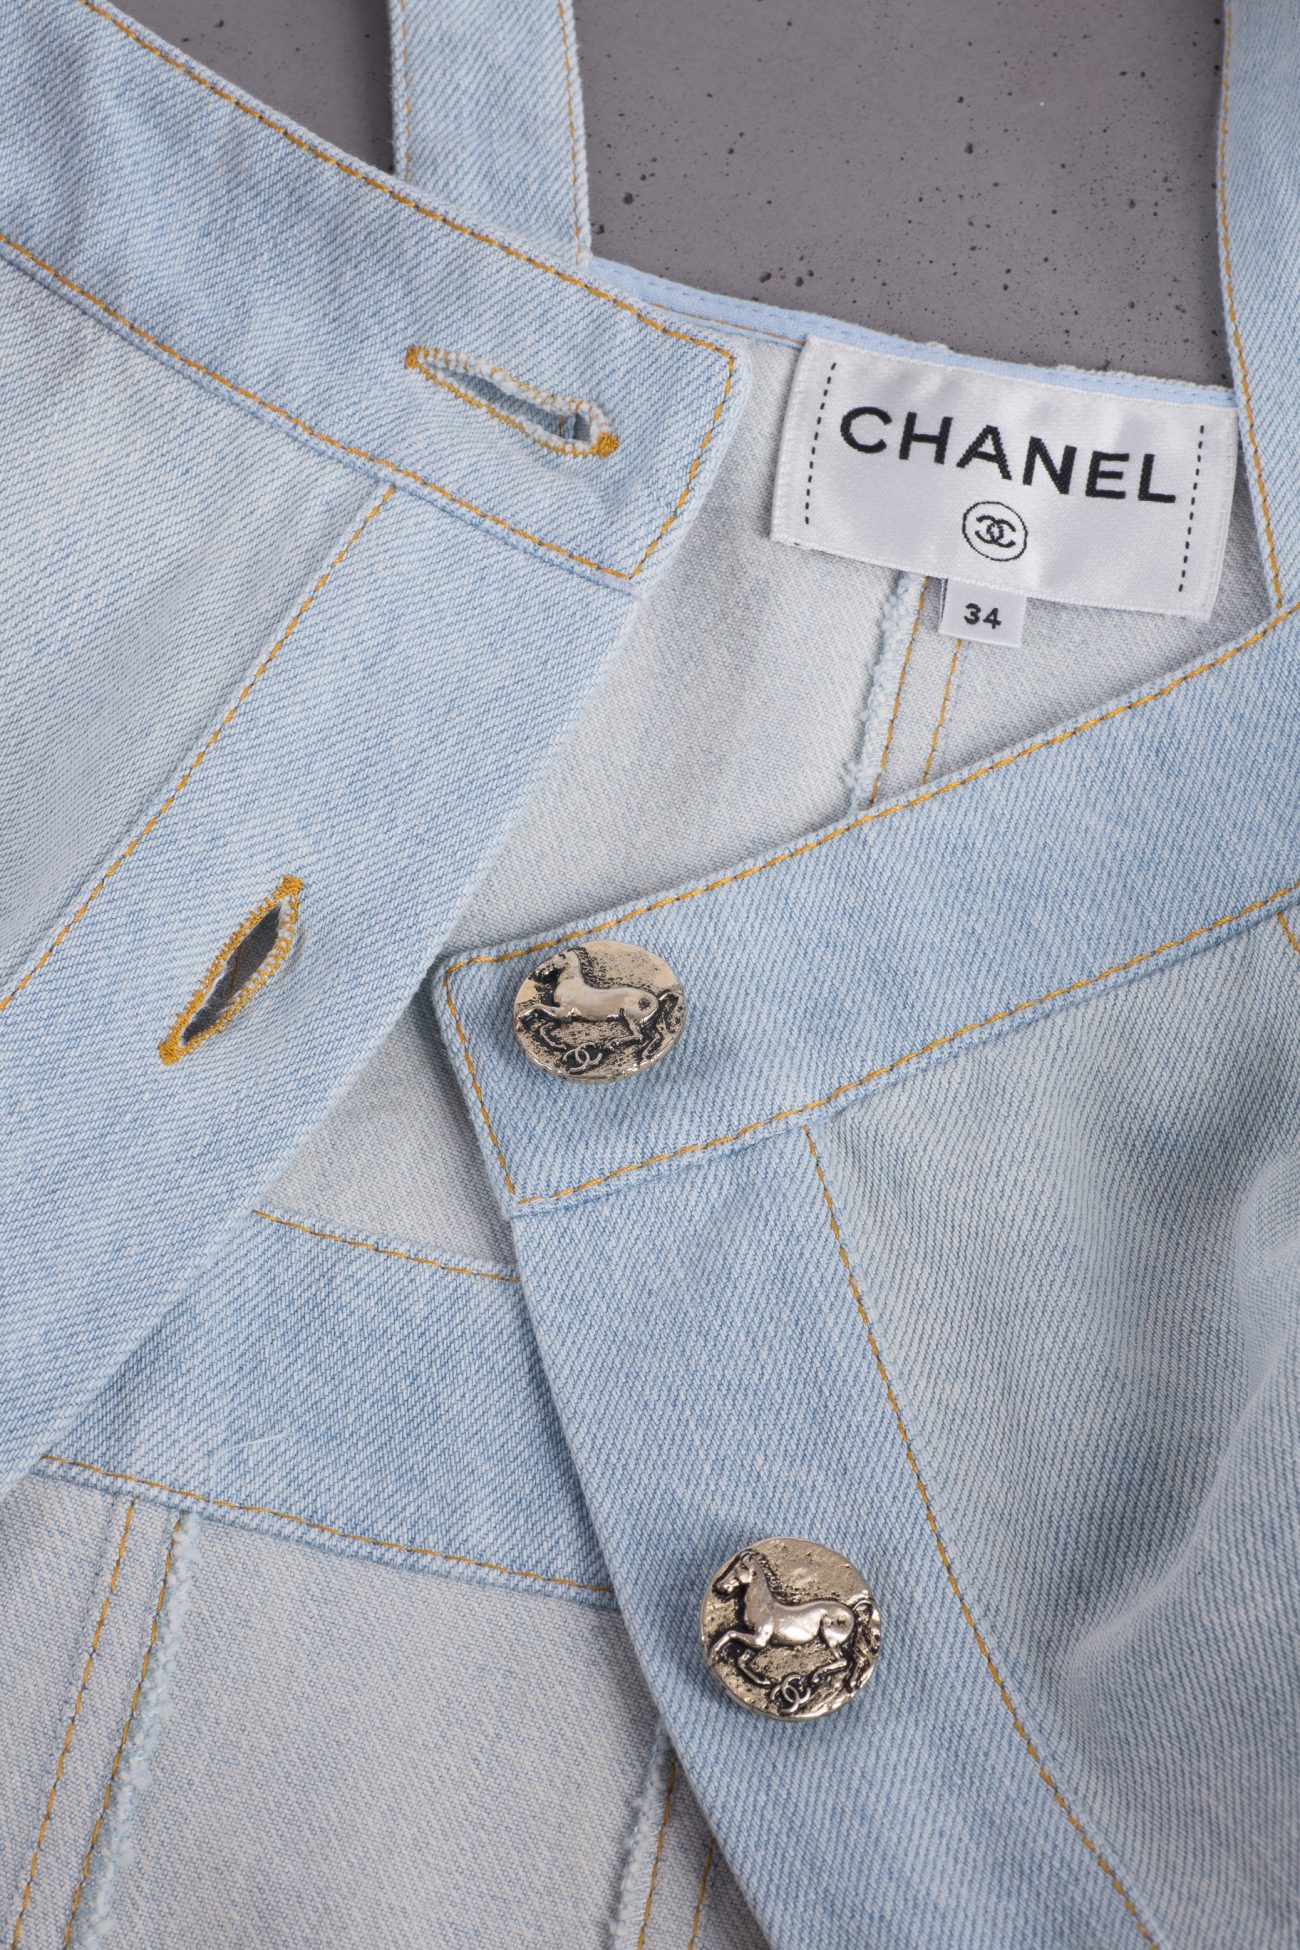 Chanel Denim Dress, FR34 - Huntessa Luxury Online Consignment Boutique